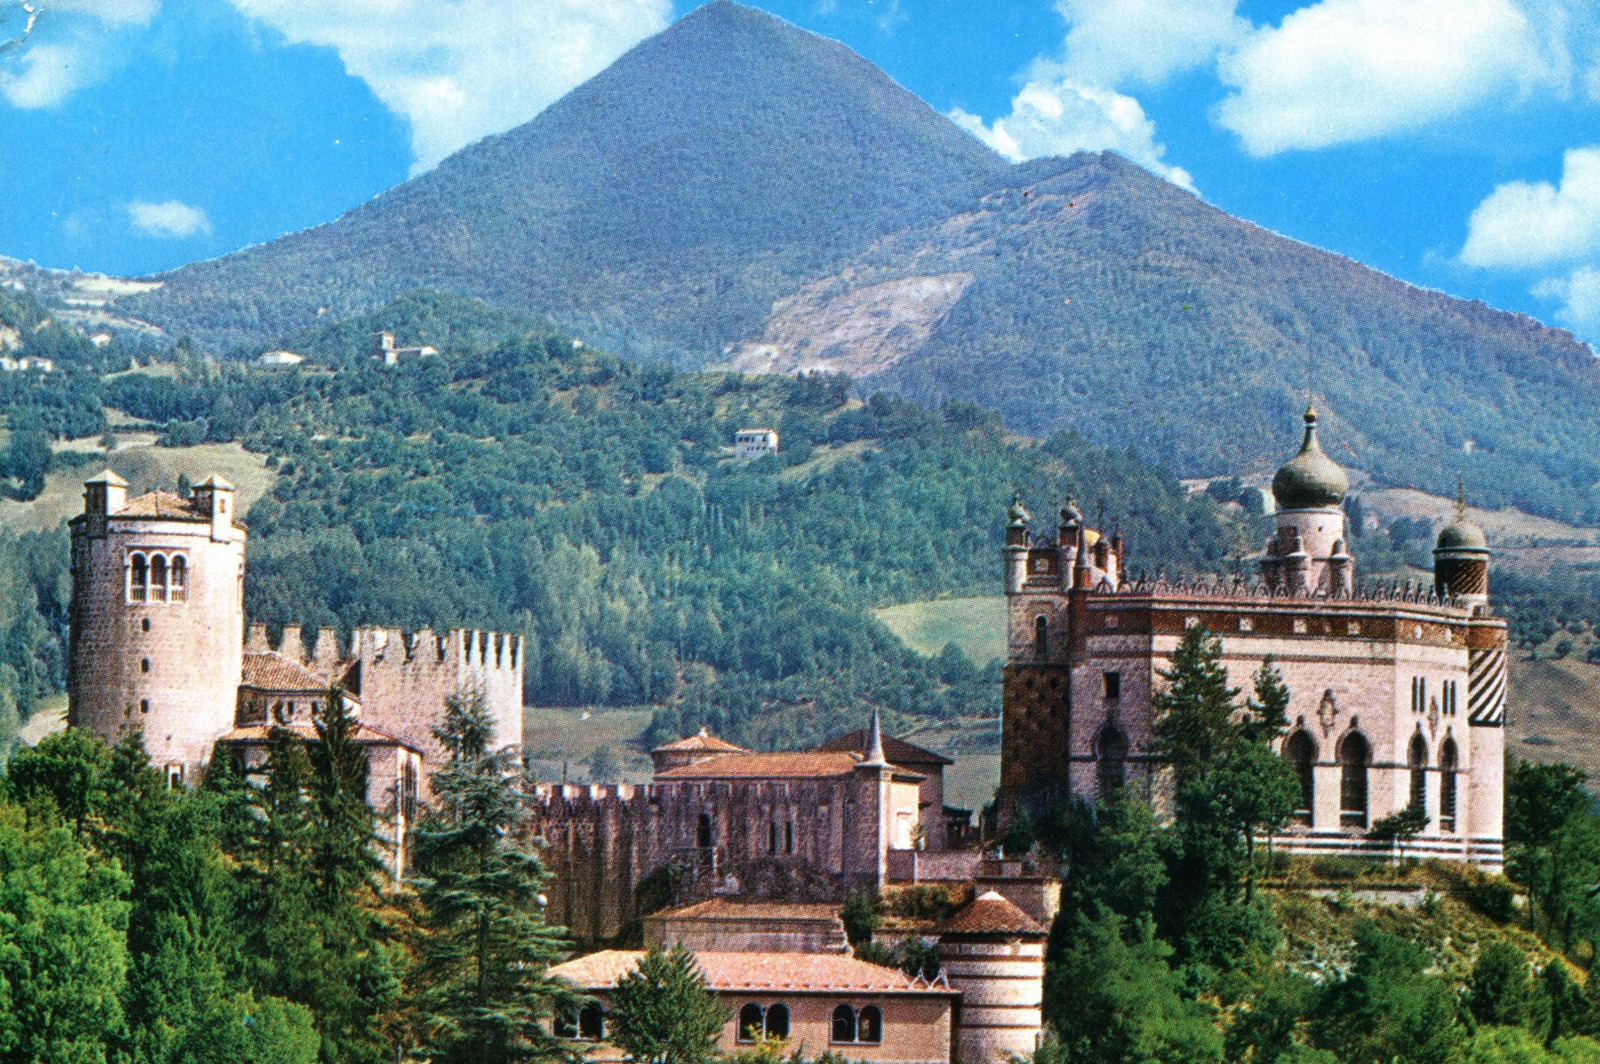 El castillo de Rocchetta Mattei